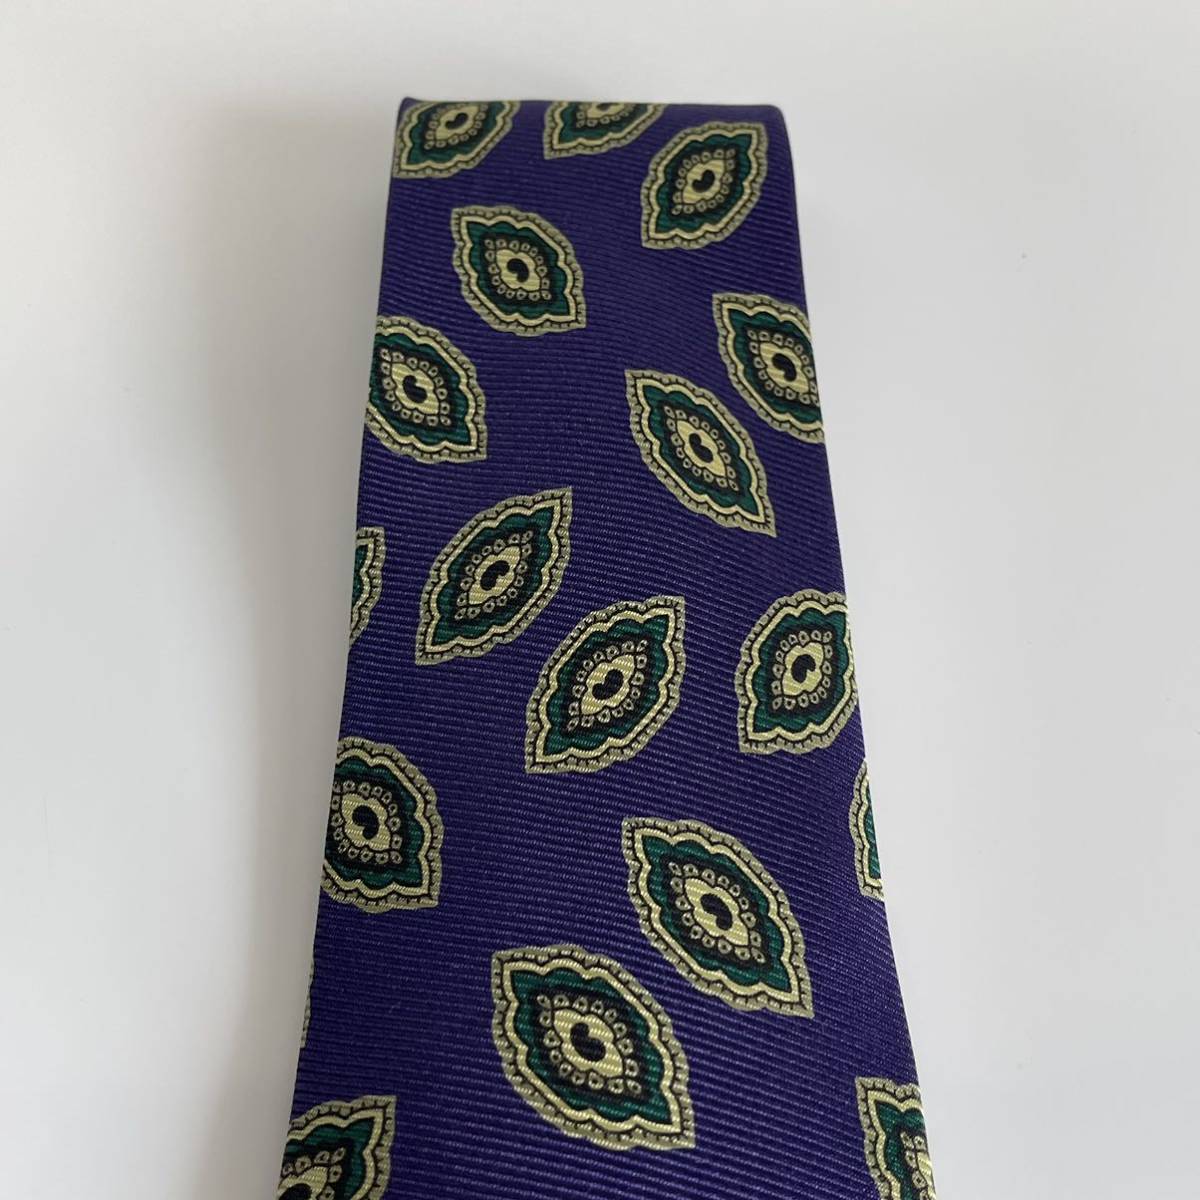 POLO by RALPH LAUREN( Polo bai Ralph Lauren ) purple green circle necktie 